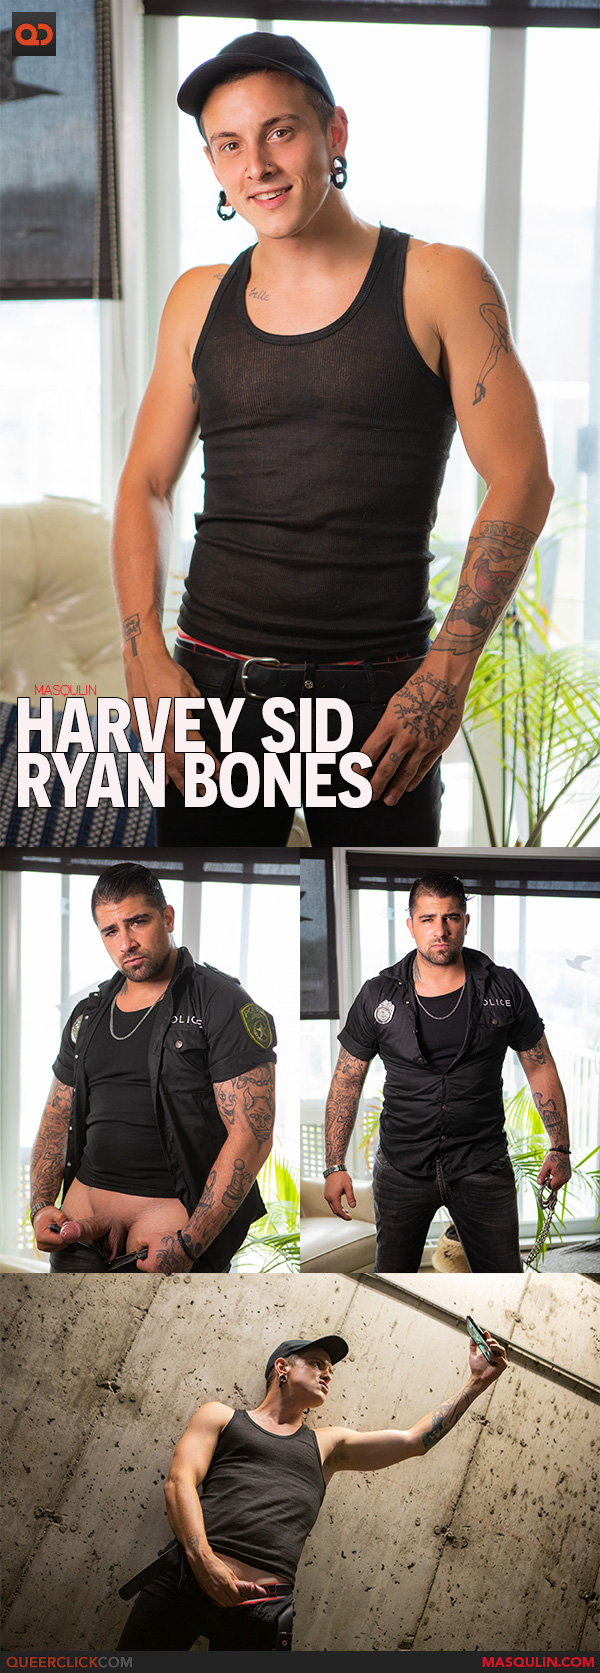 Masqulin: Harvey Sid and  Ryan Bones